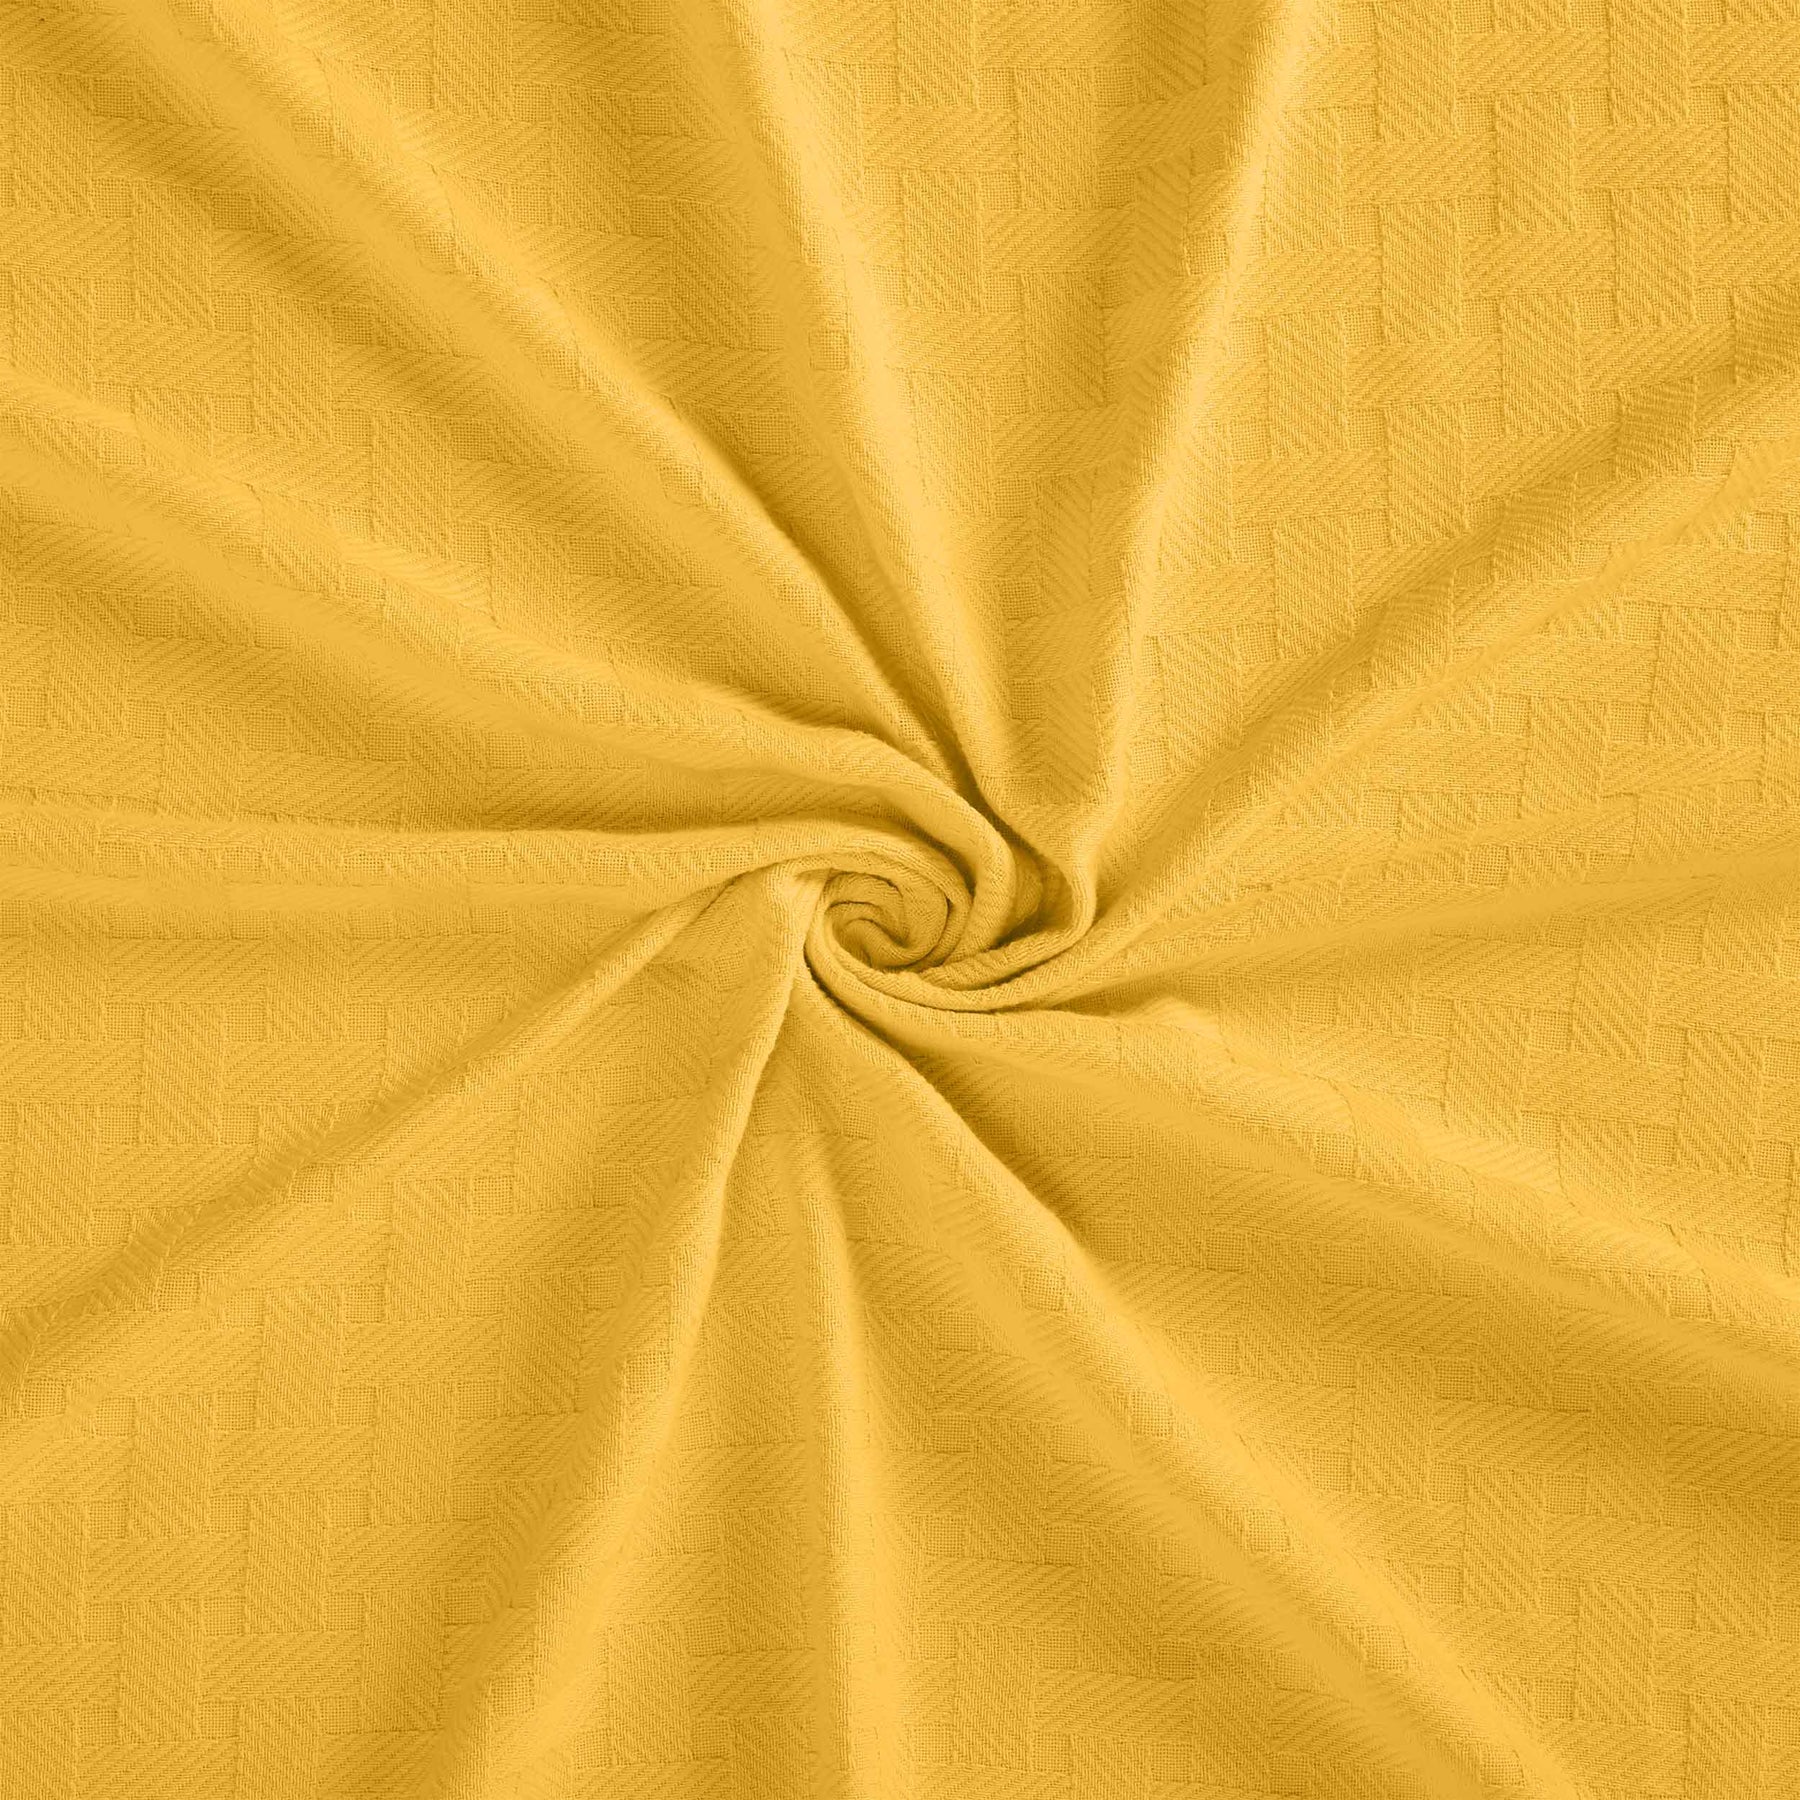 Basketweave All Season Cotton Blanket - Yellow